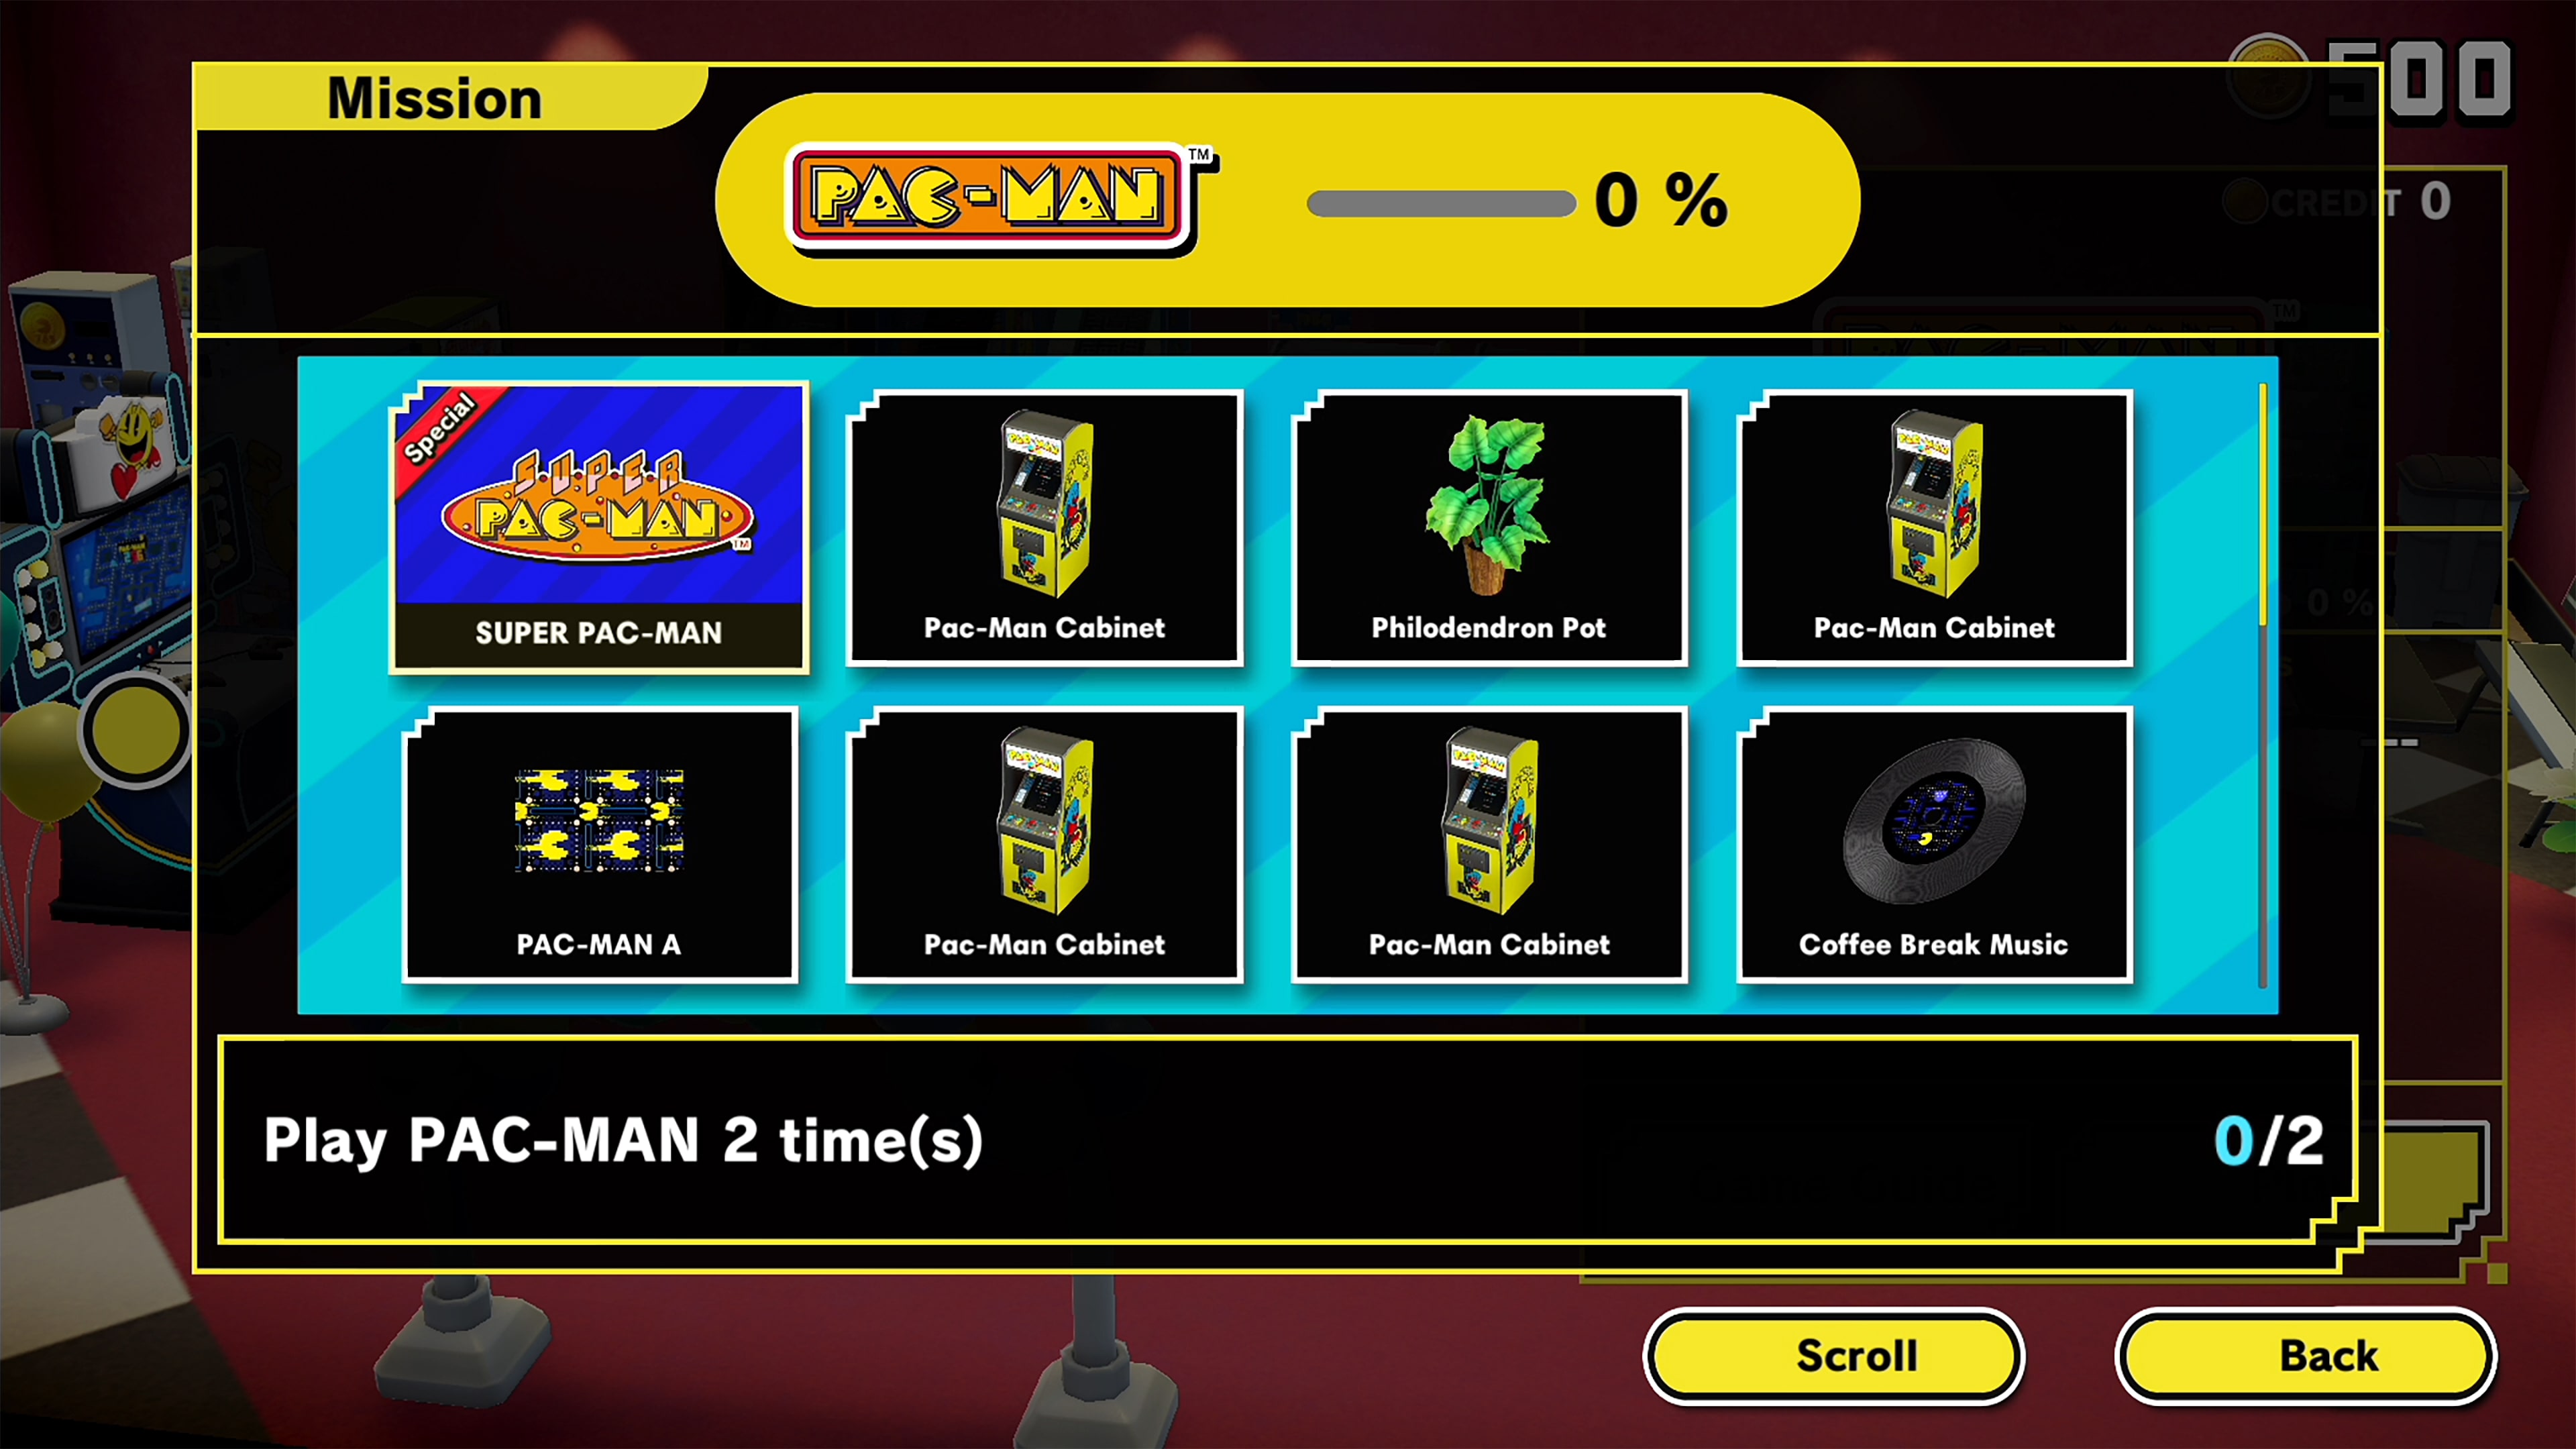 Jogo Pacman Museum PS4 KaBuM